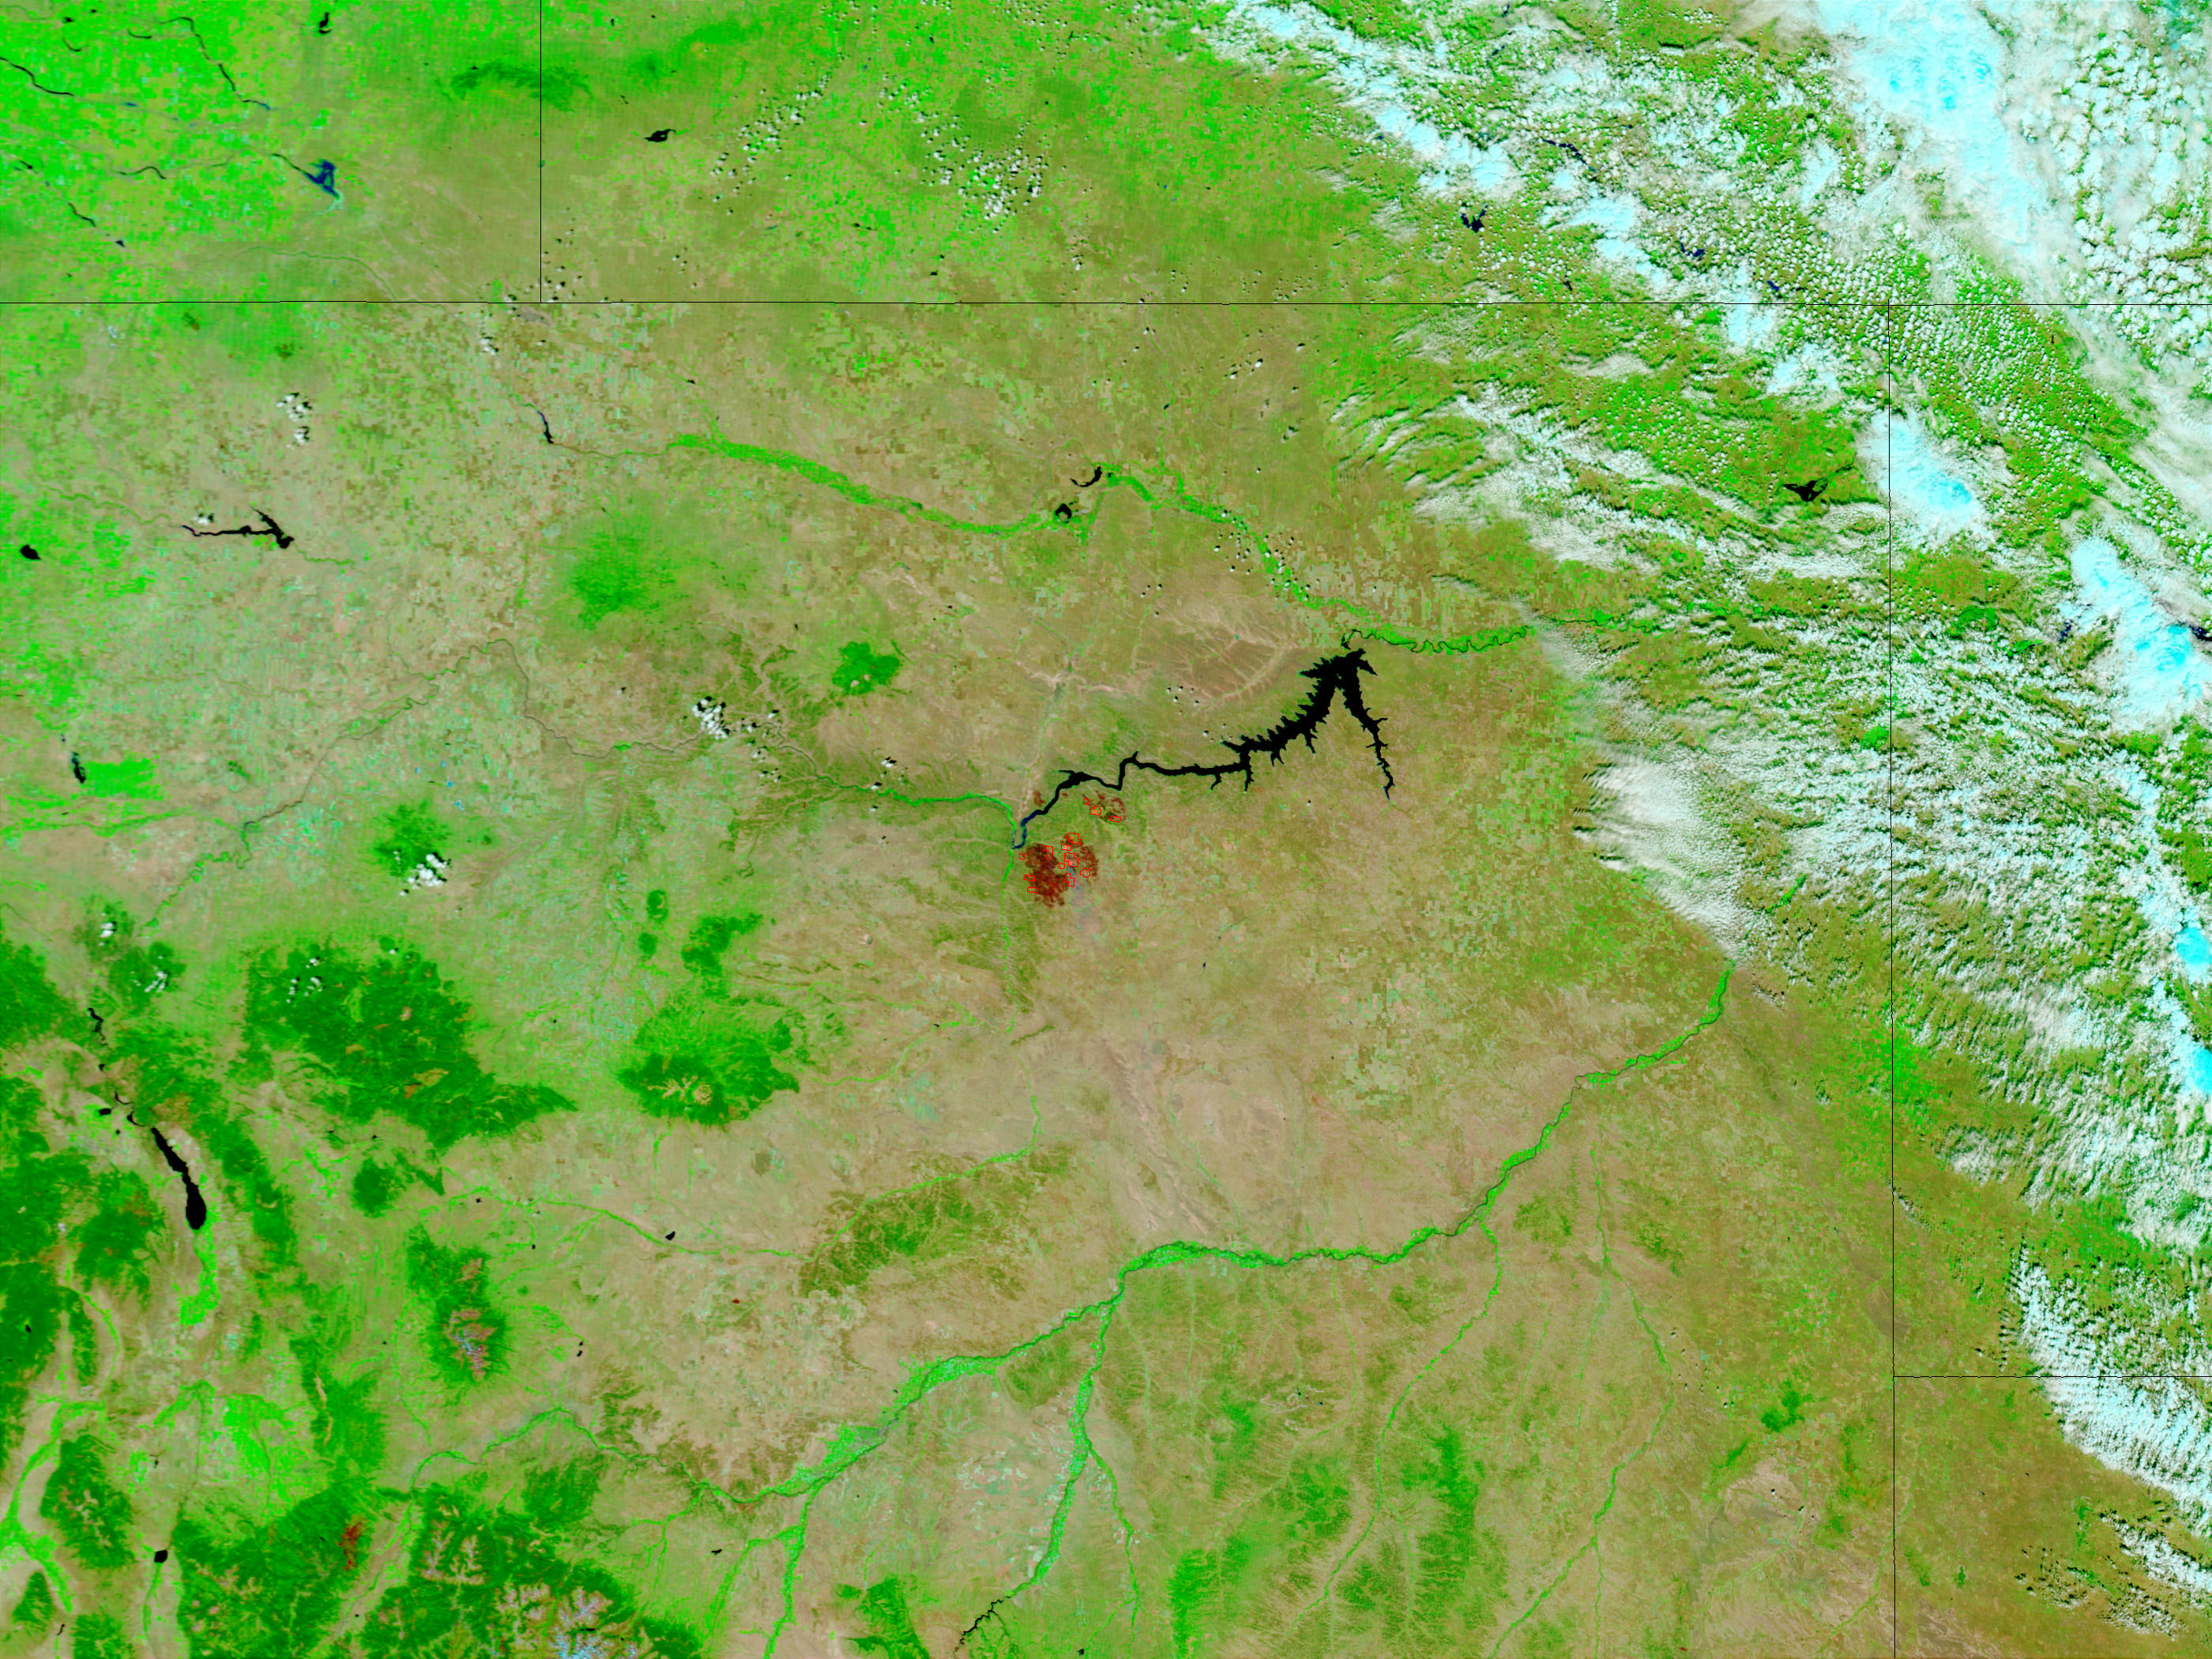 Missouri Breaks Complex Fire, Montana (false color) - related image preview